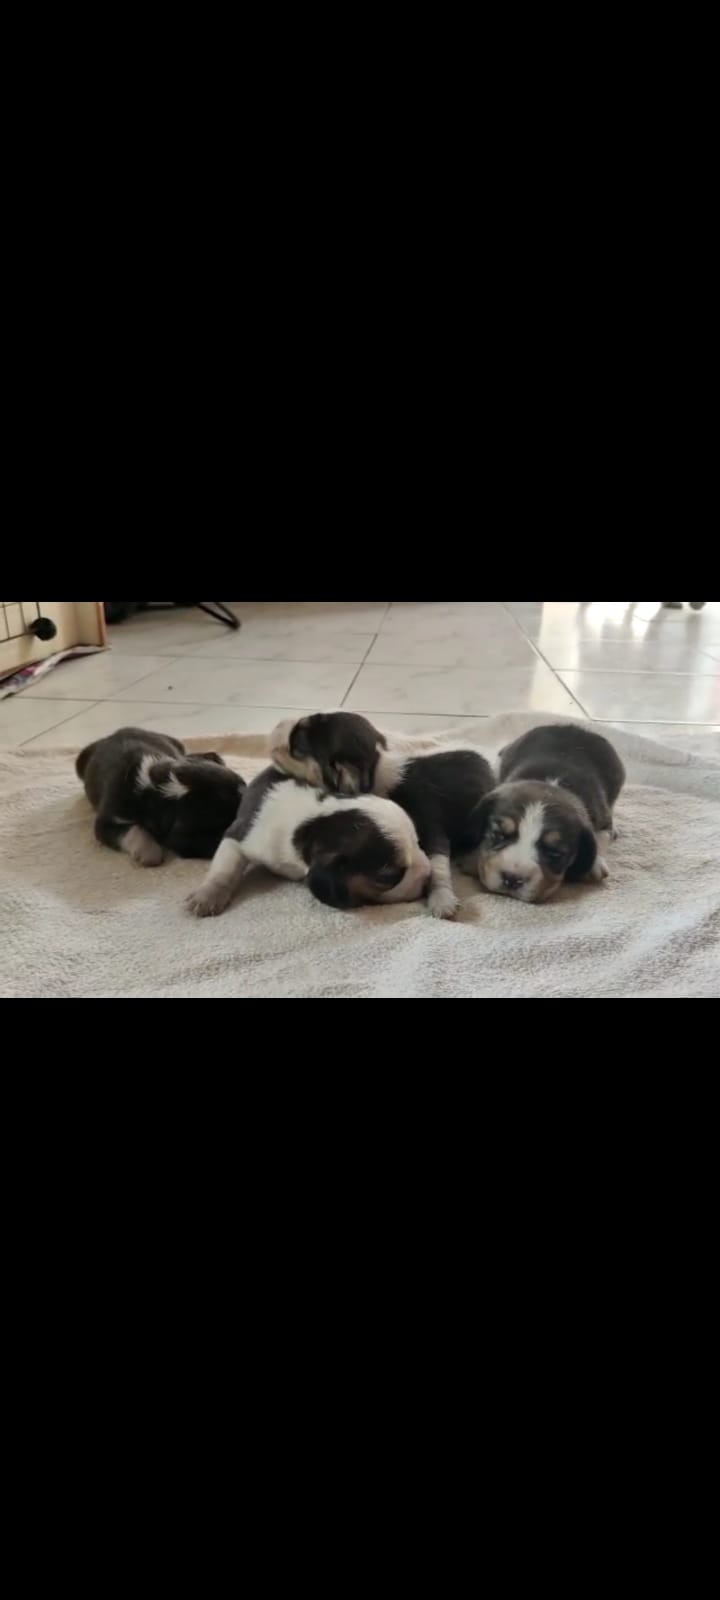 Beagle puppies from Chennai. Breeder: kennelsmd